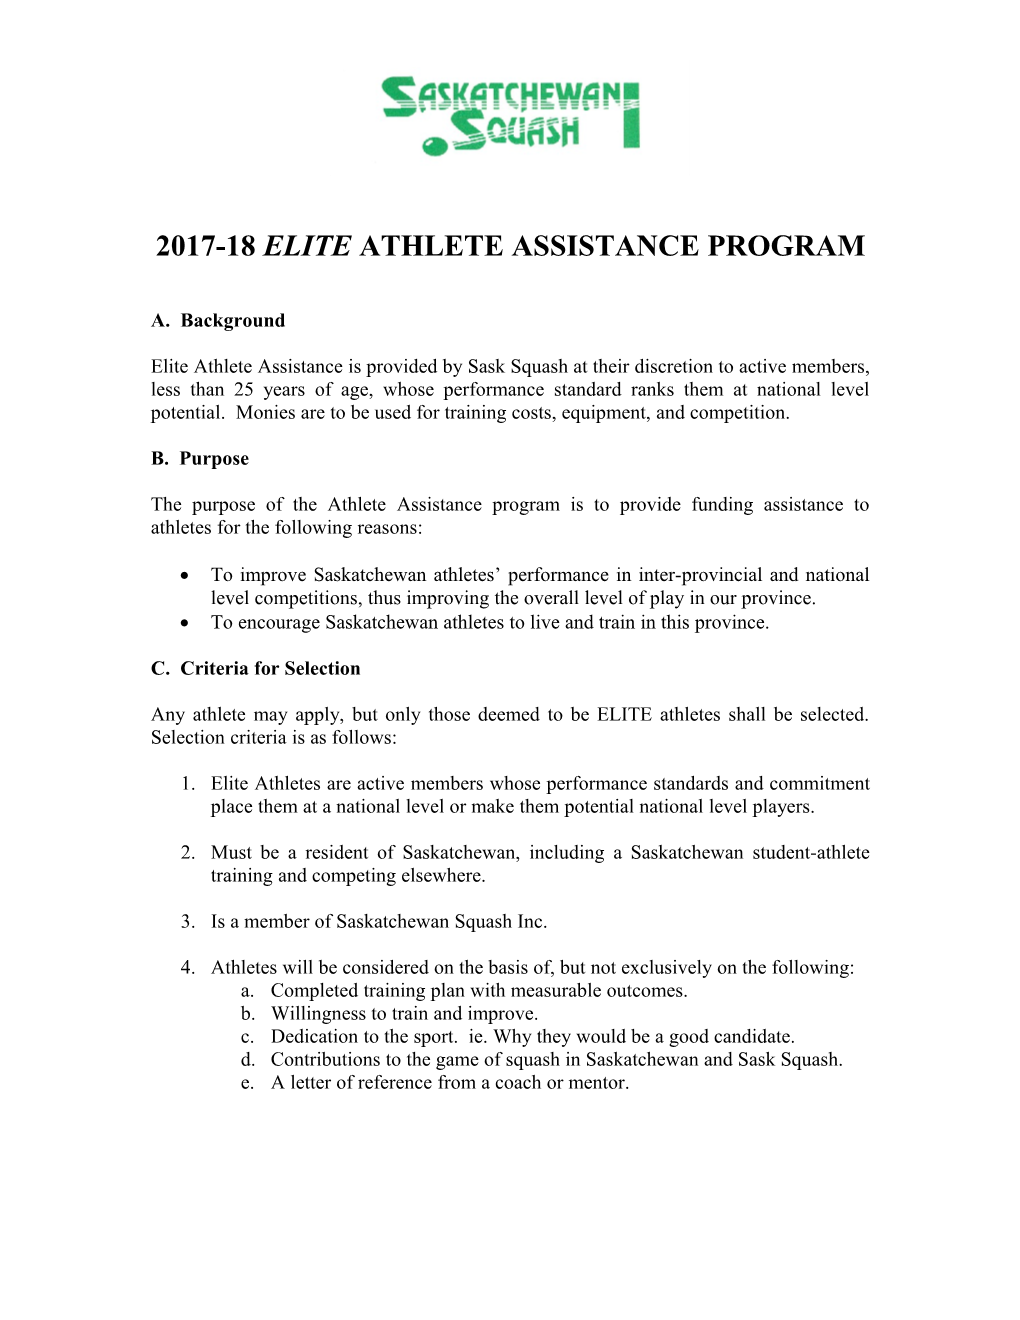 2017-18Elite Athlete Assistance Program